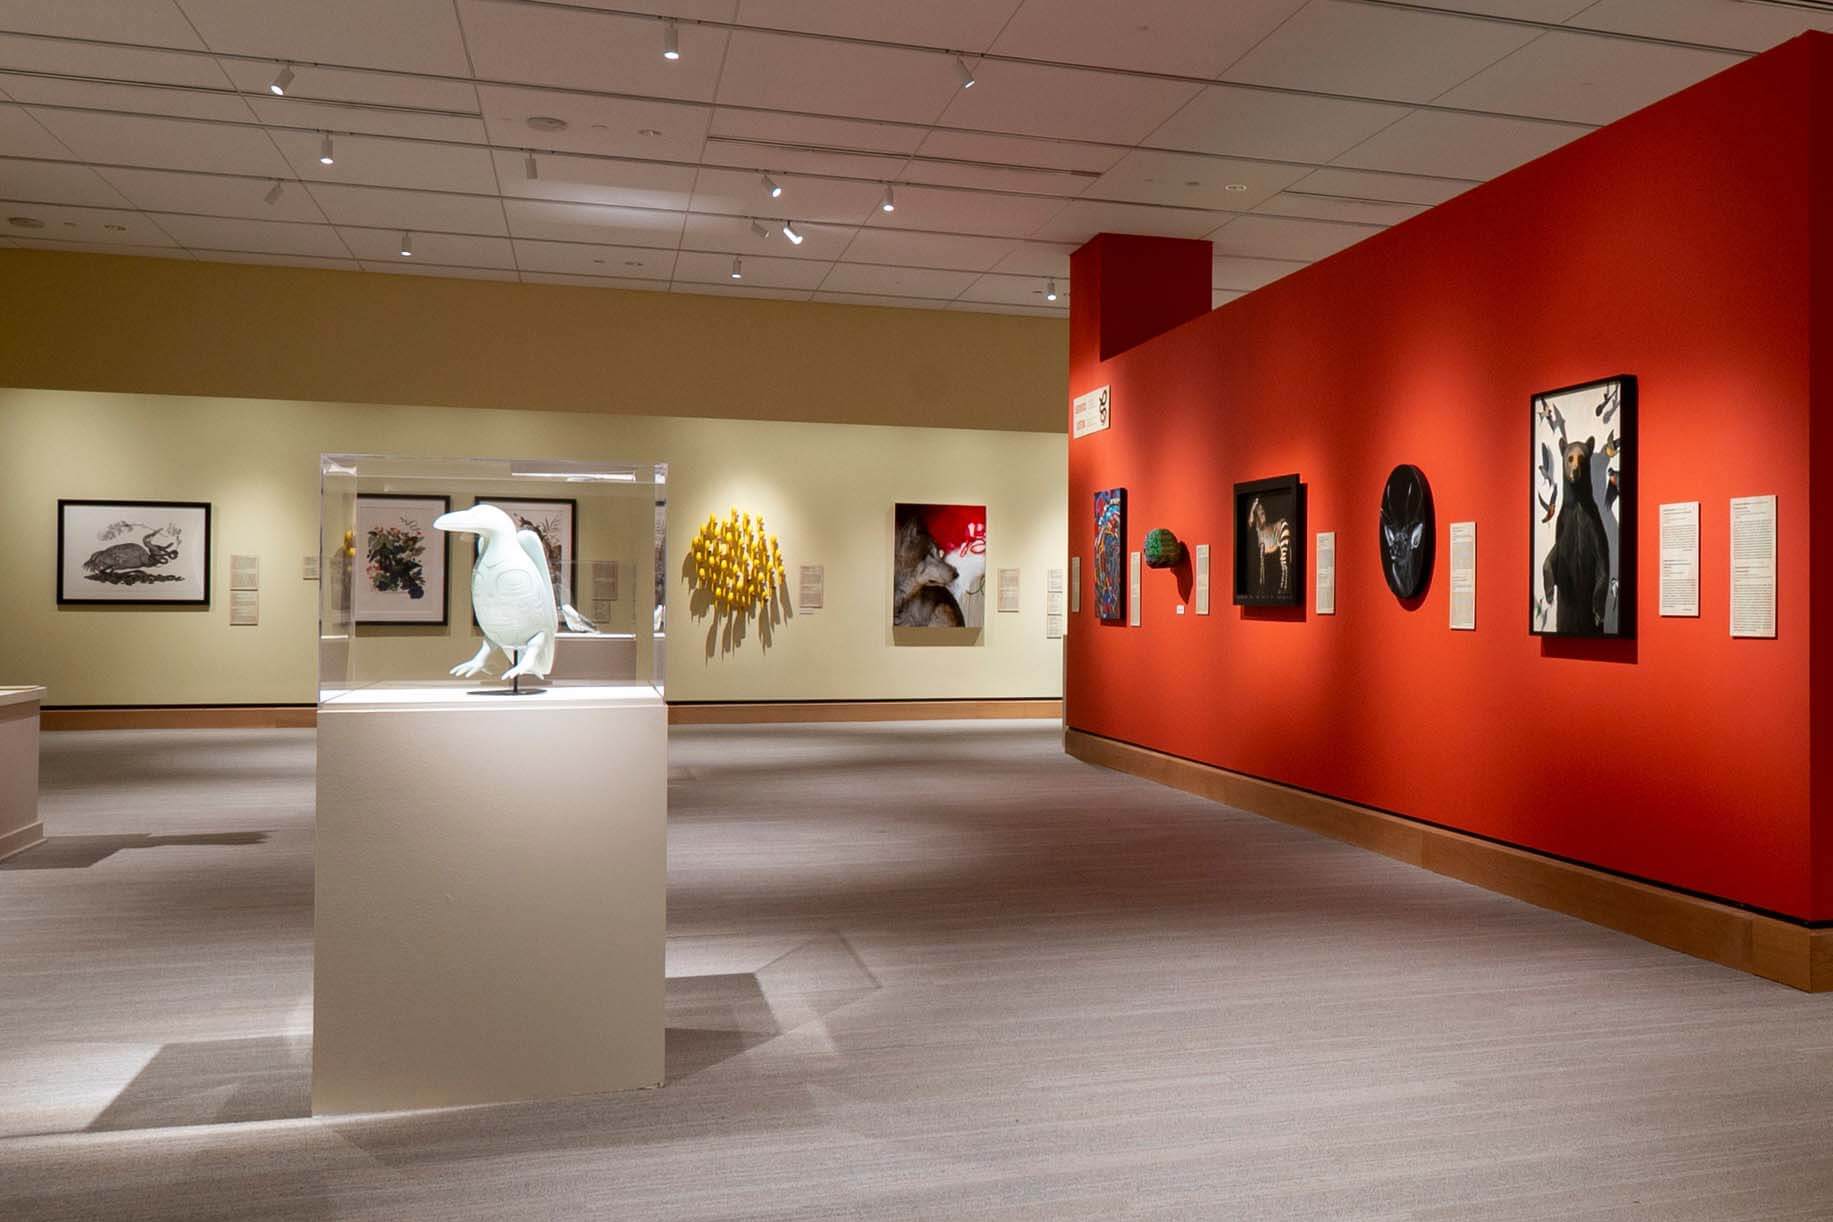 Mennello Museum of American Art displays